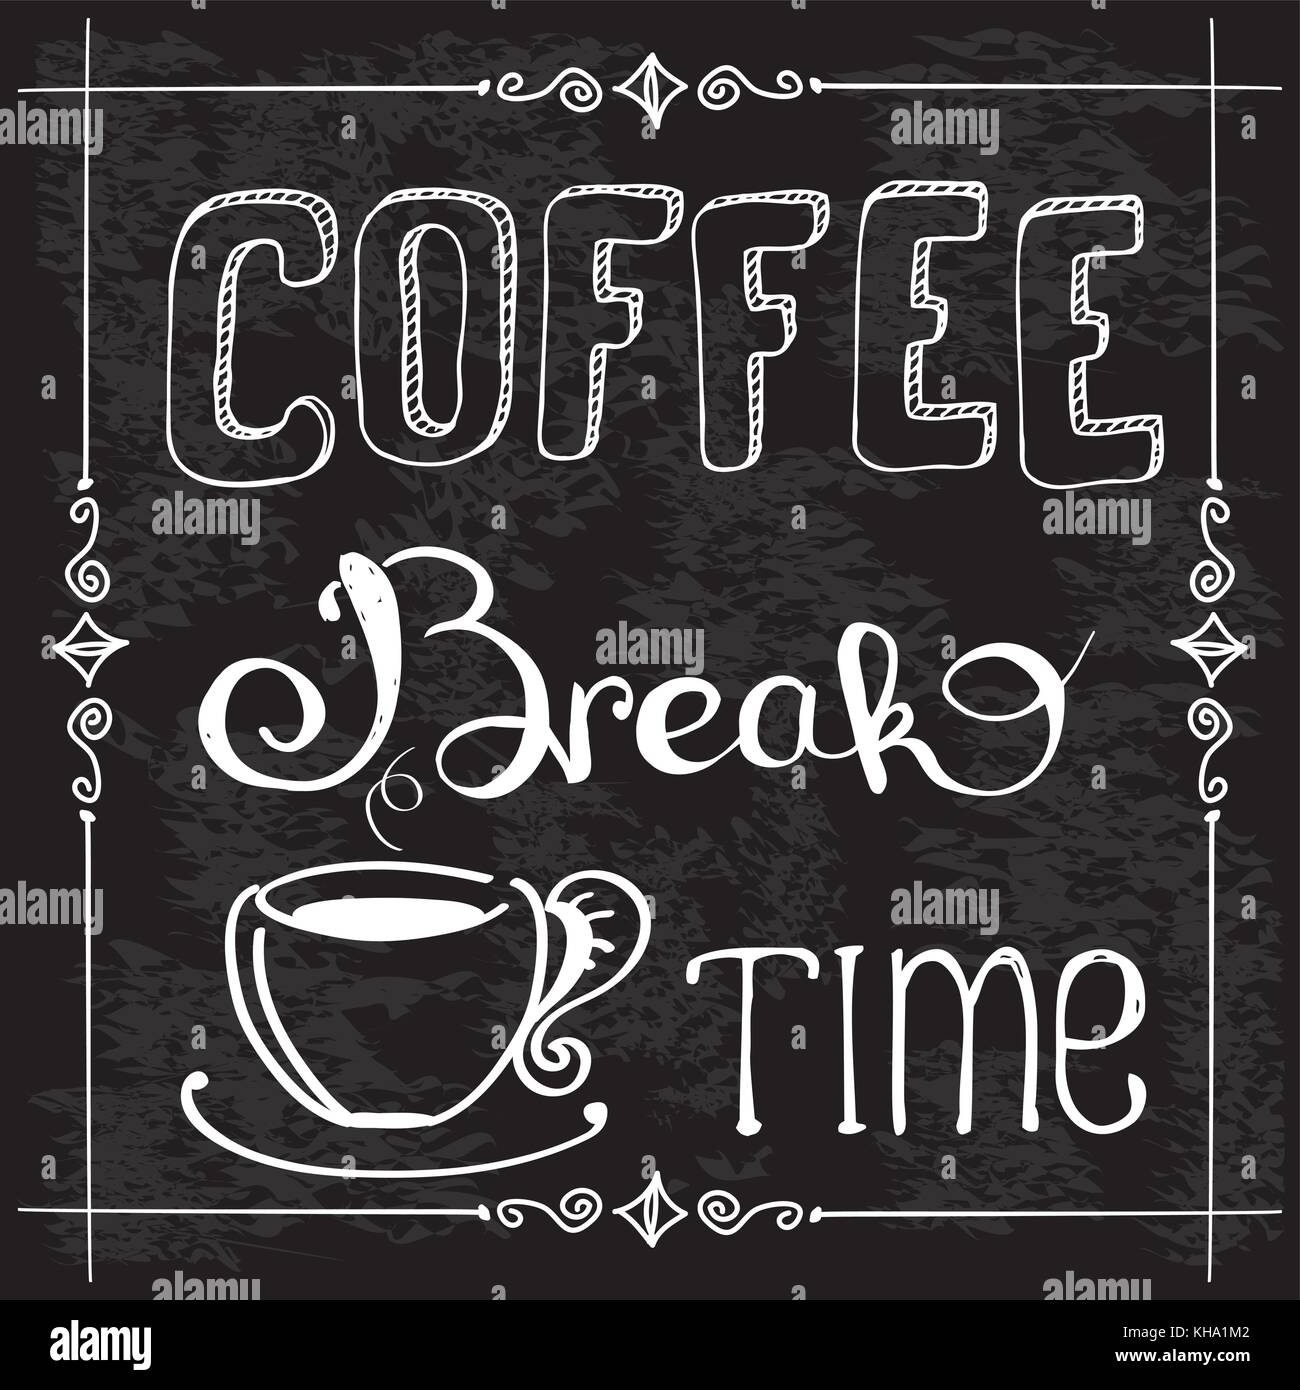 coffee break images